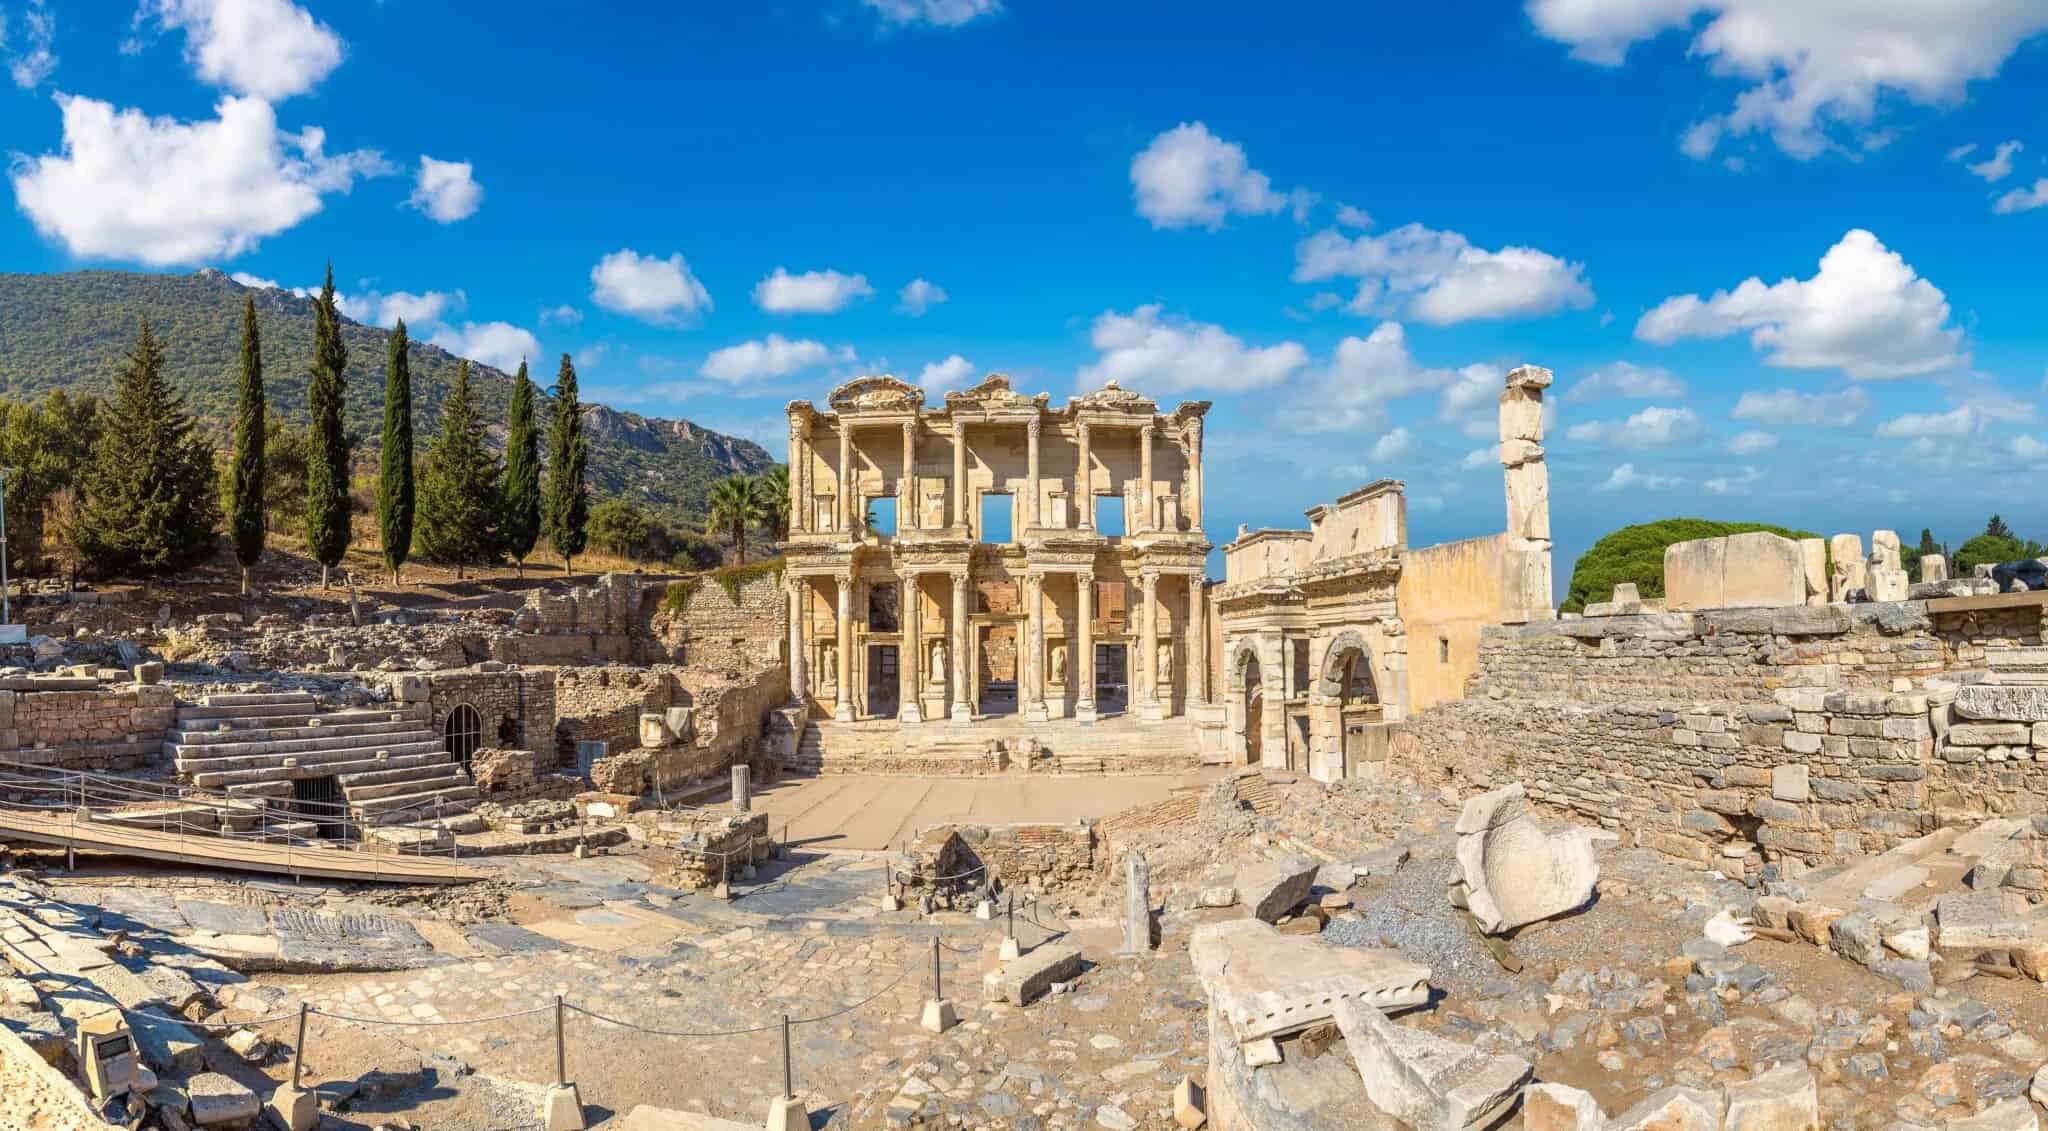 The Library of Ephesus